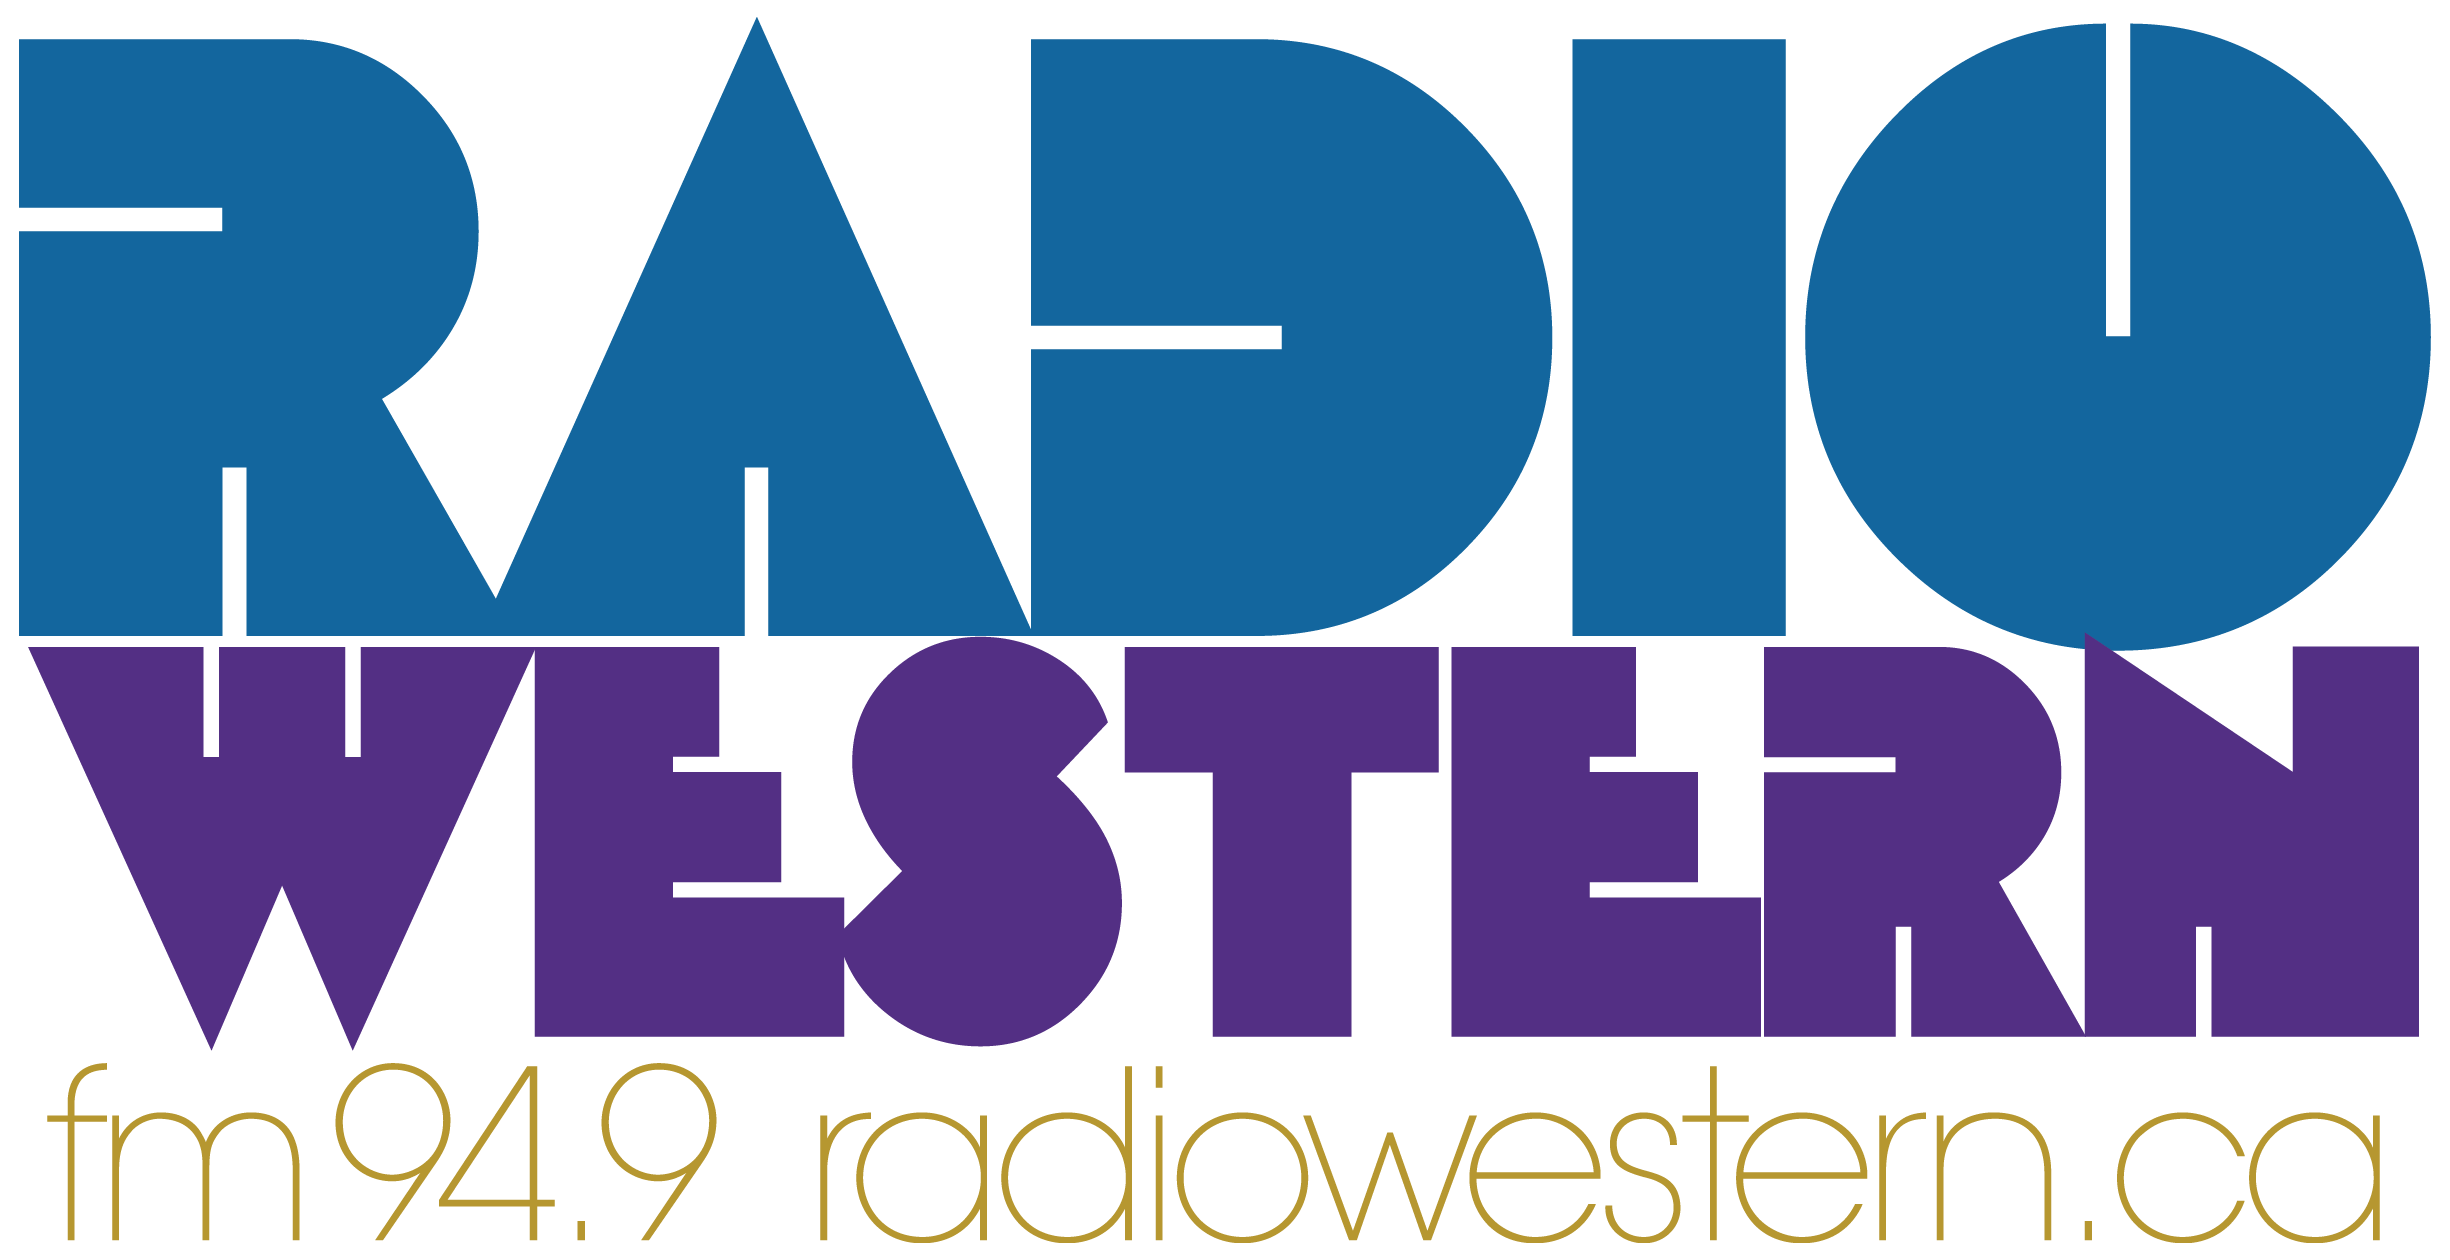 Radio Western